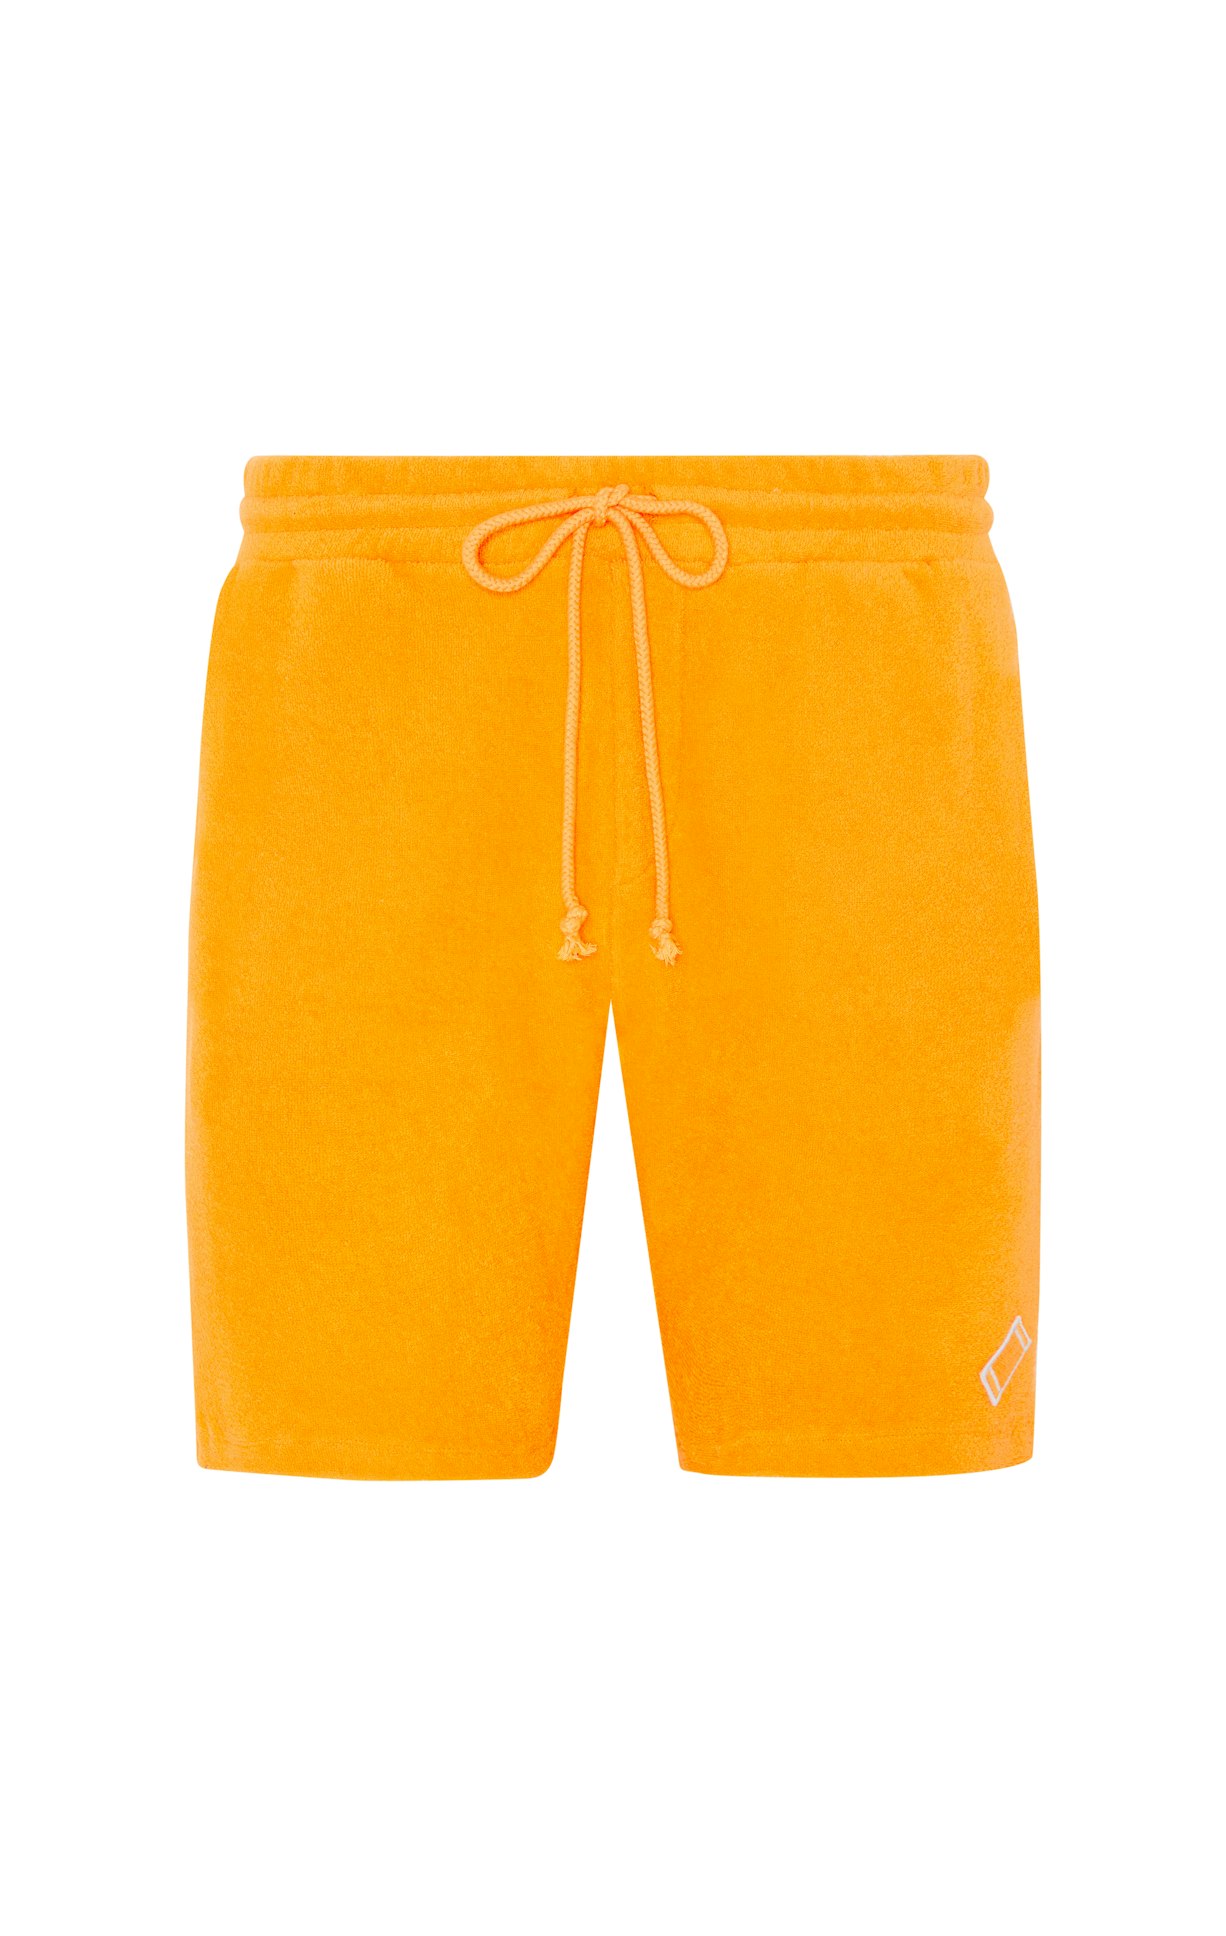 Towel Club Shorts Orange